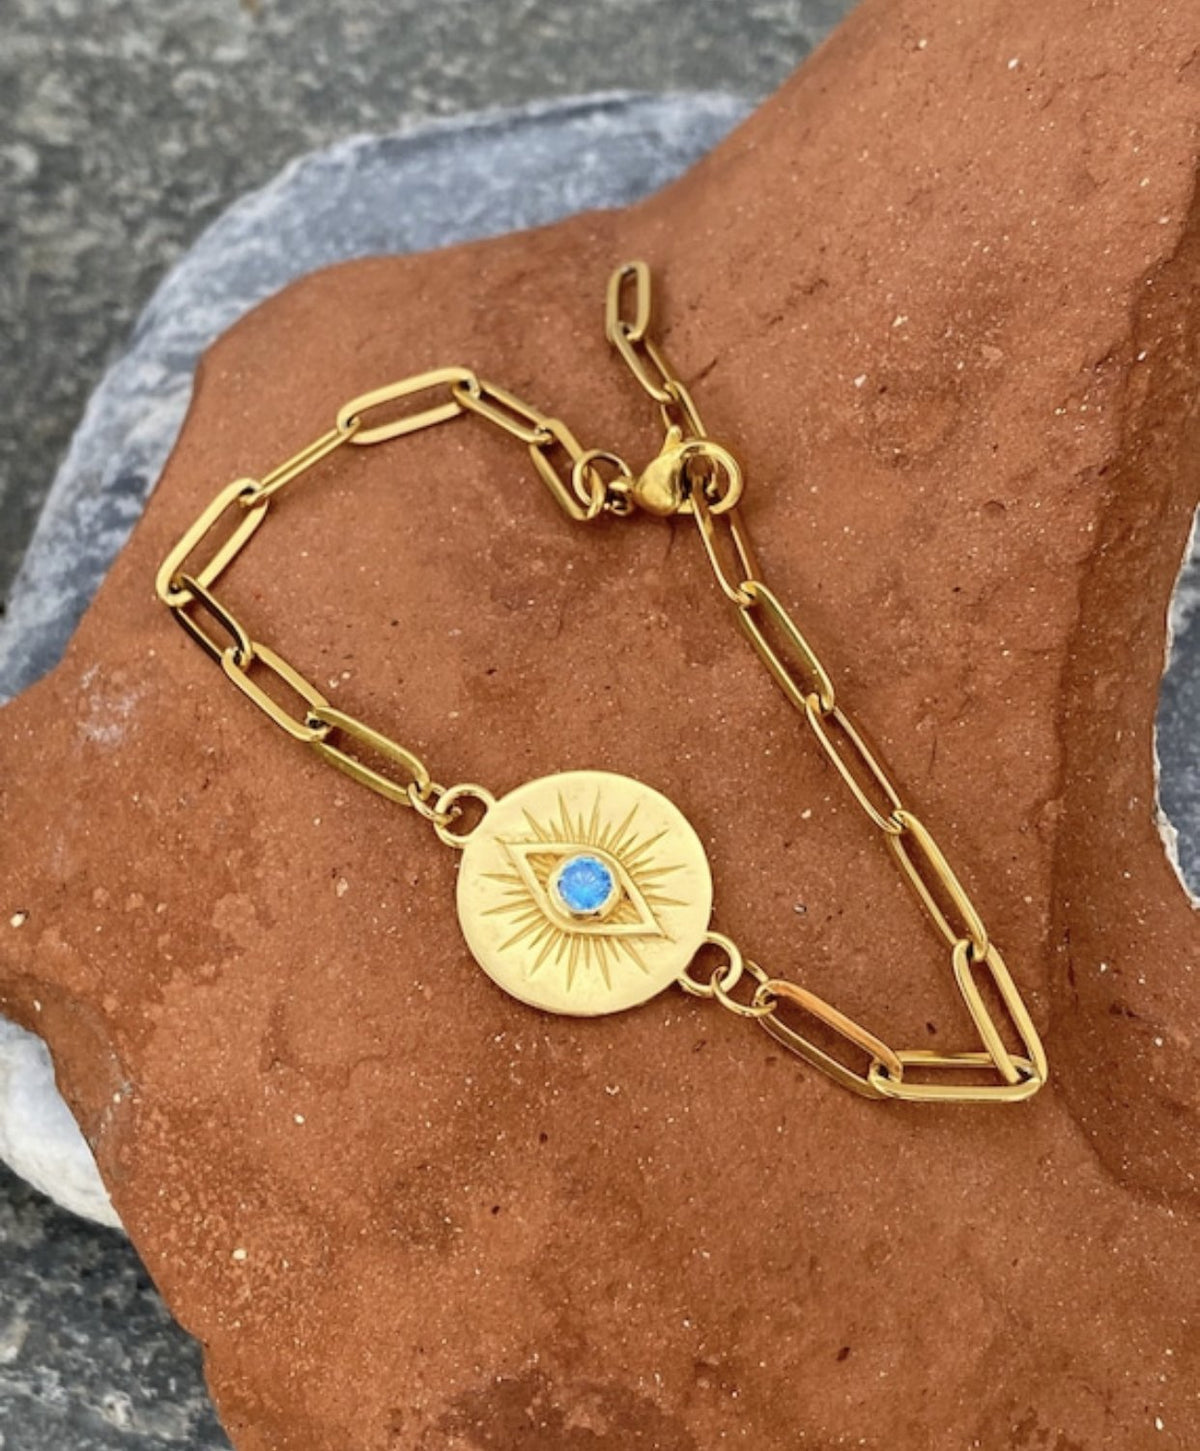 gold evil eye bracelet with a blue gemstone